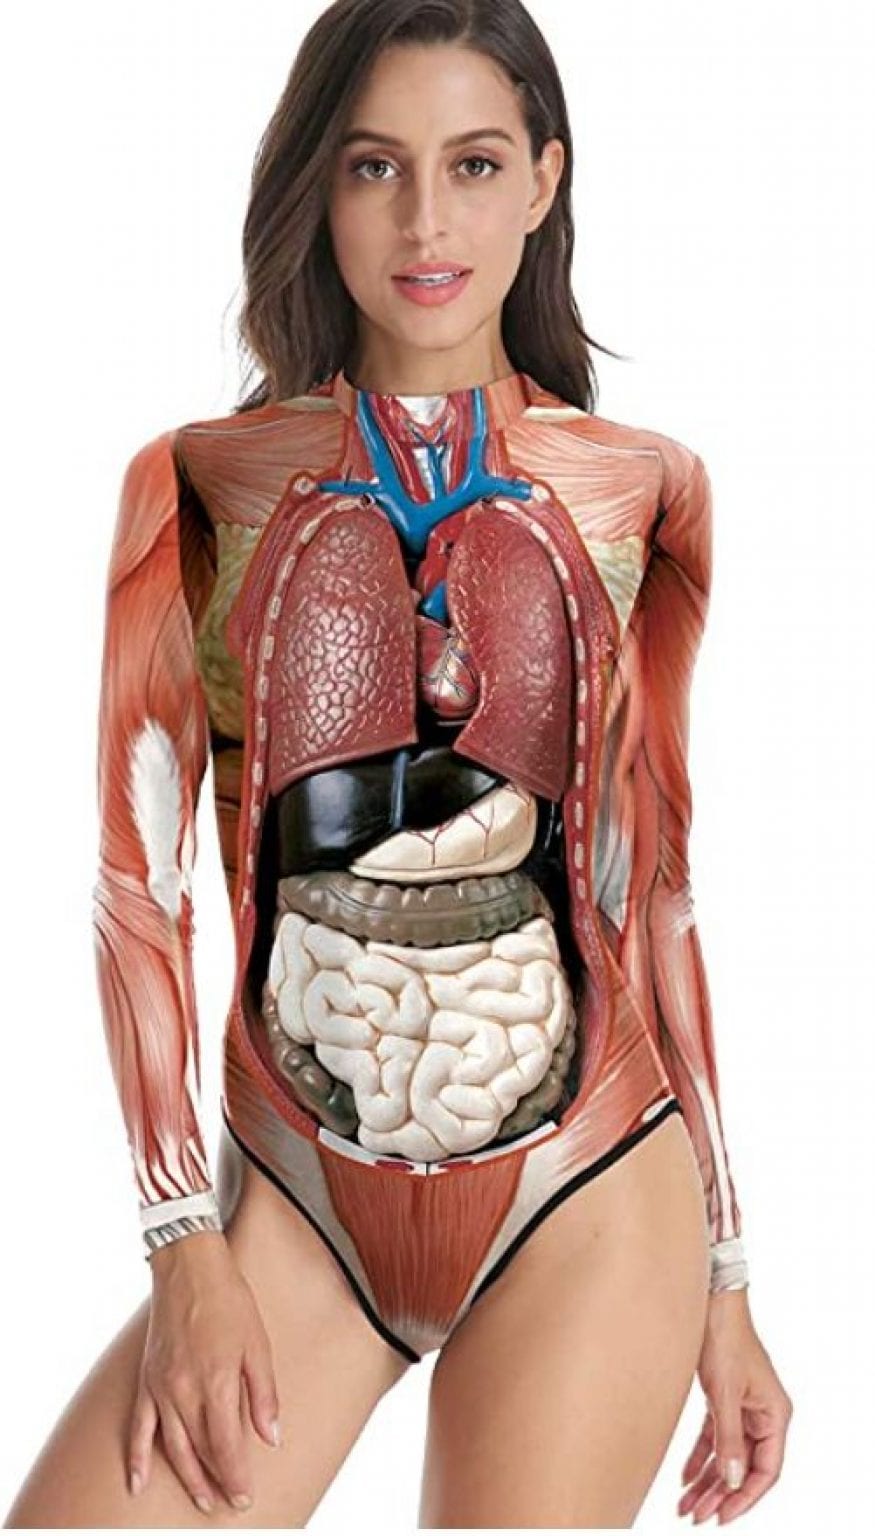 анатомия человека органы женщины фото